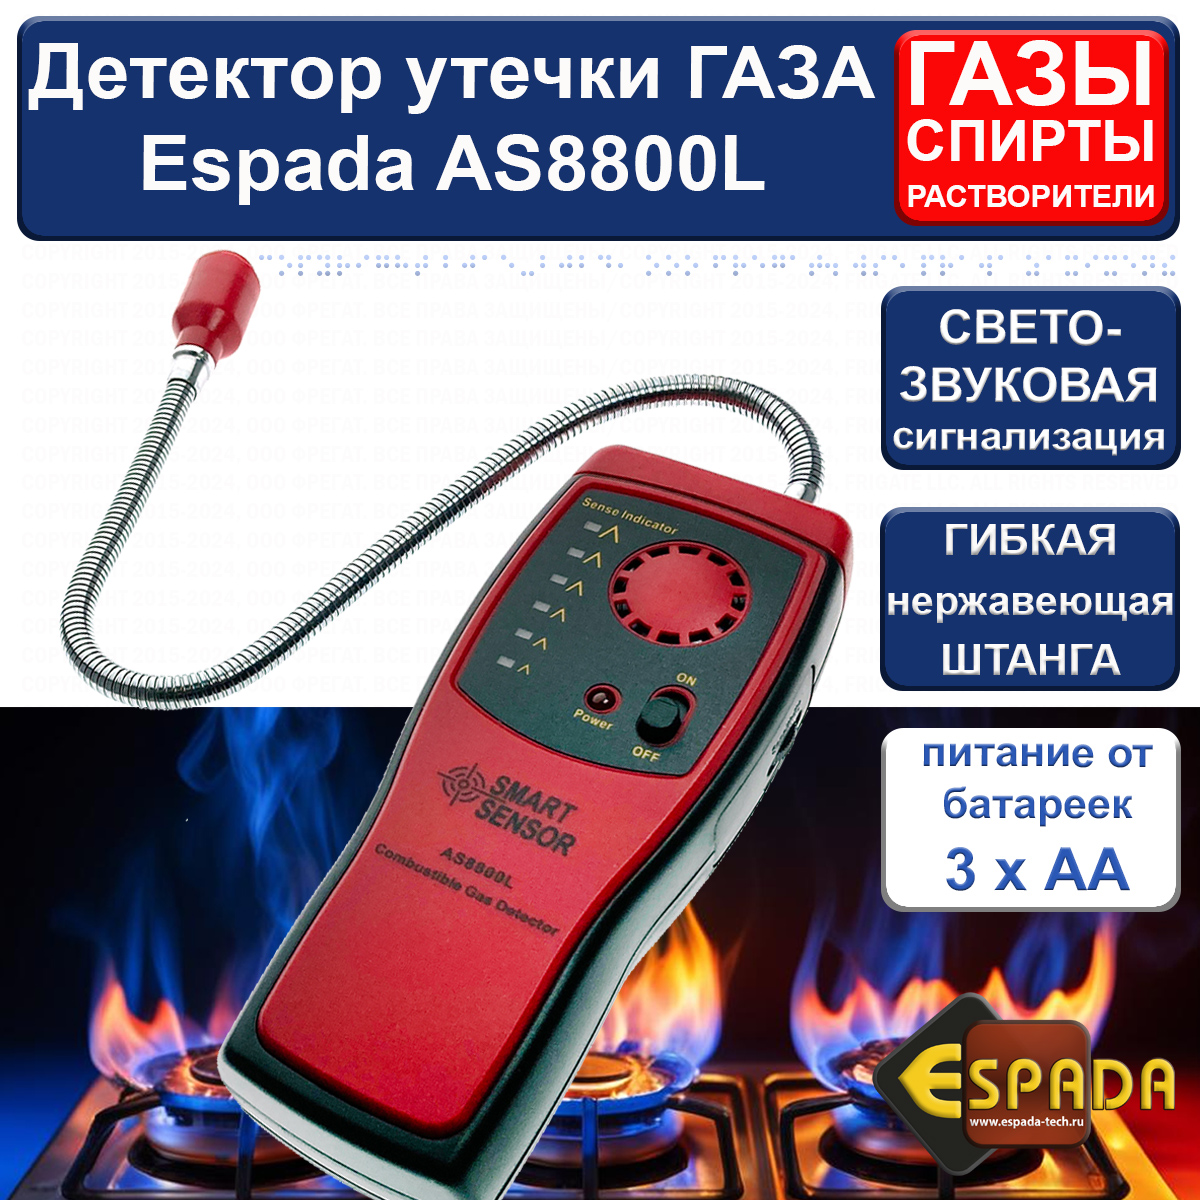 Детектор утечки газа Espada AS8800L детектор утечки газа espada as8800l